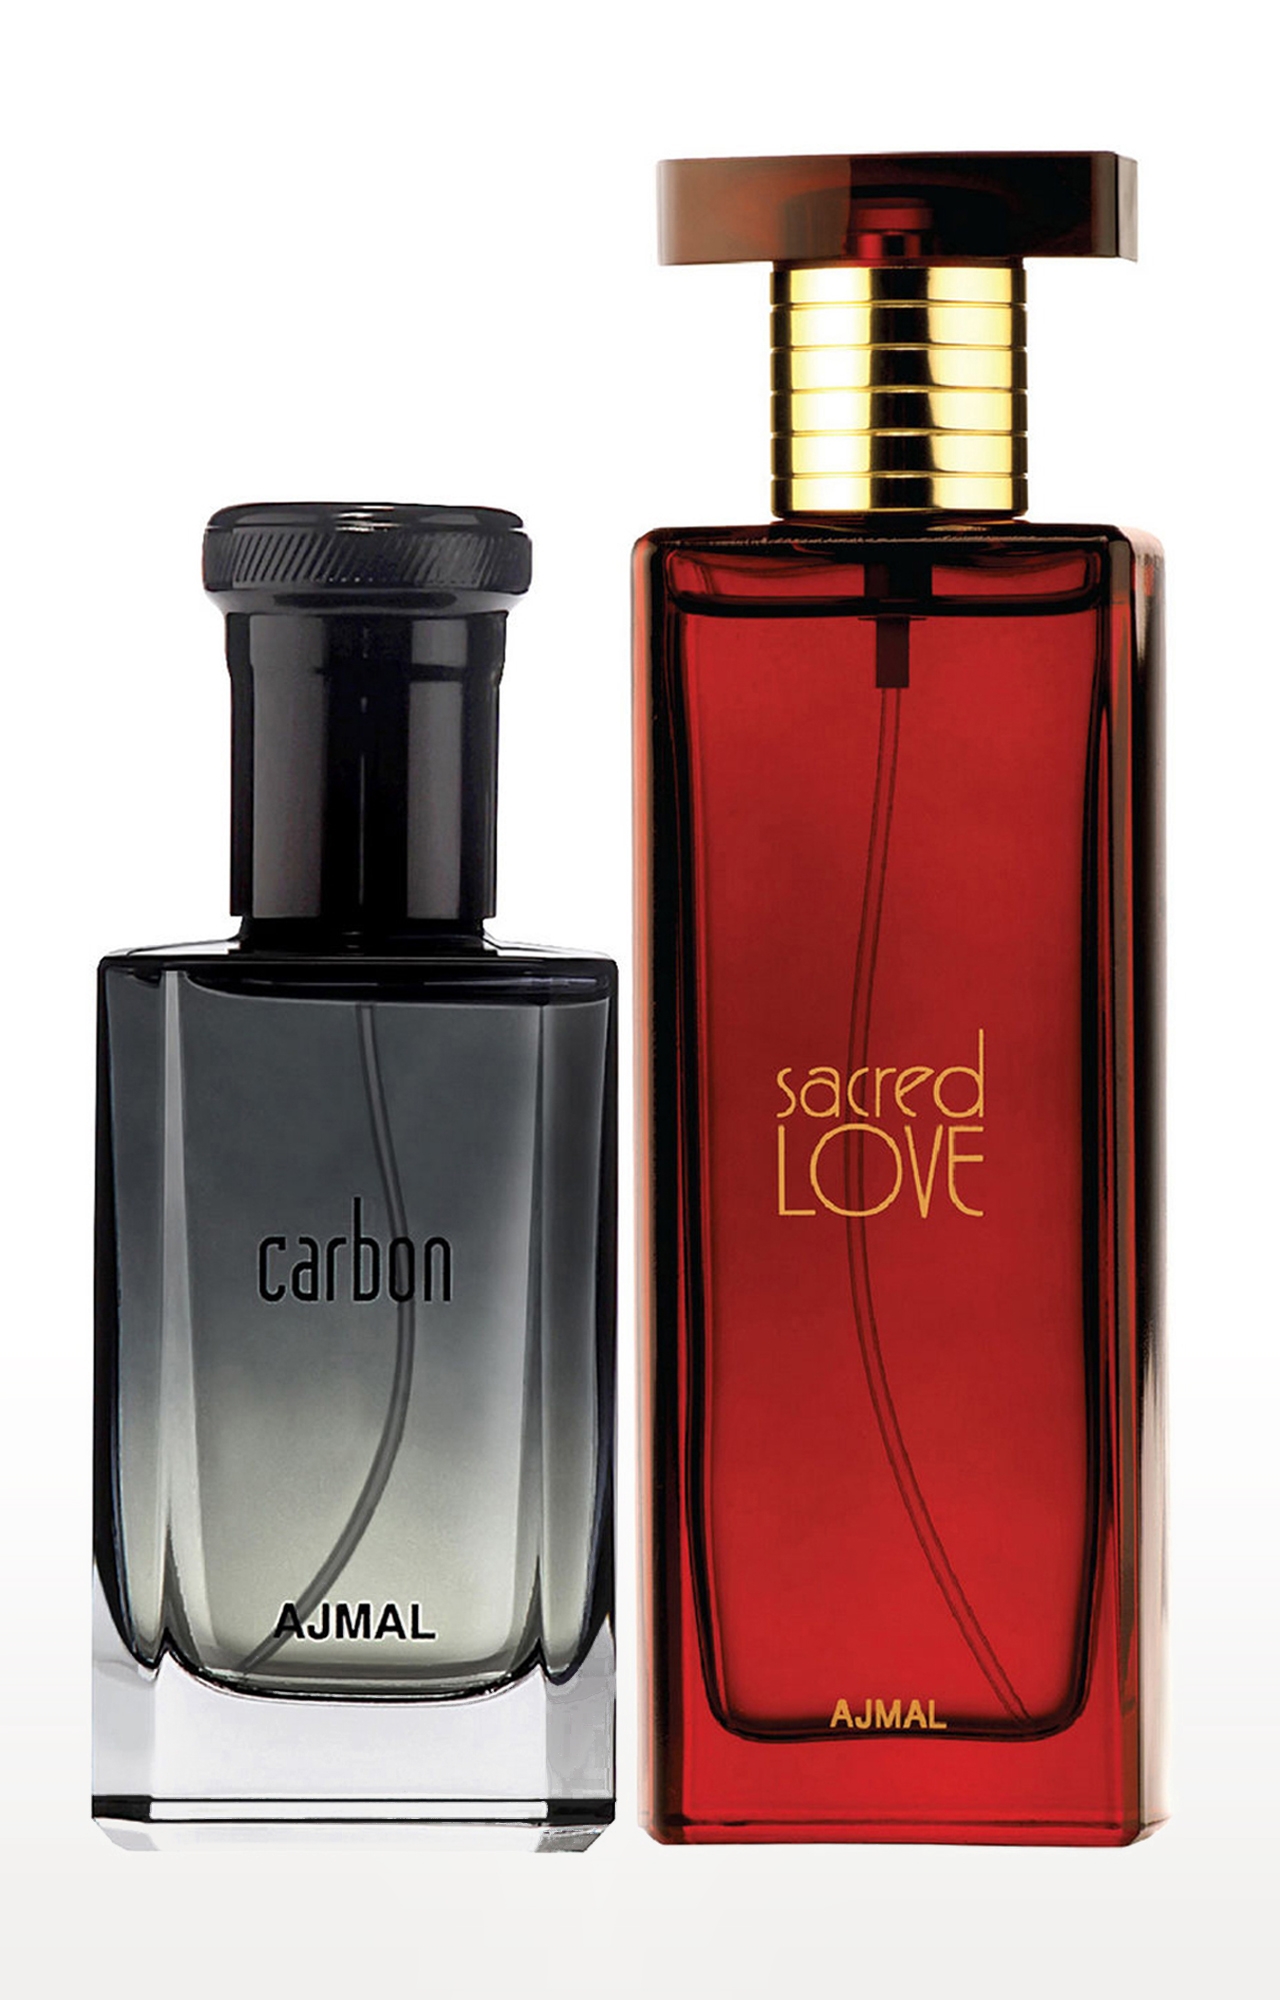 Ajmal Carbon EDP Perfume 100ml for Men and Sacred Love EDP Musky Perfume 50ml for Women